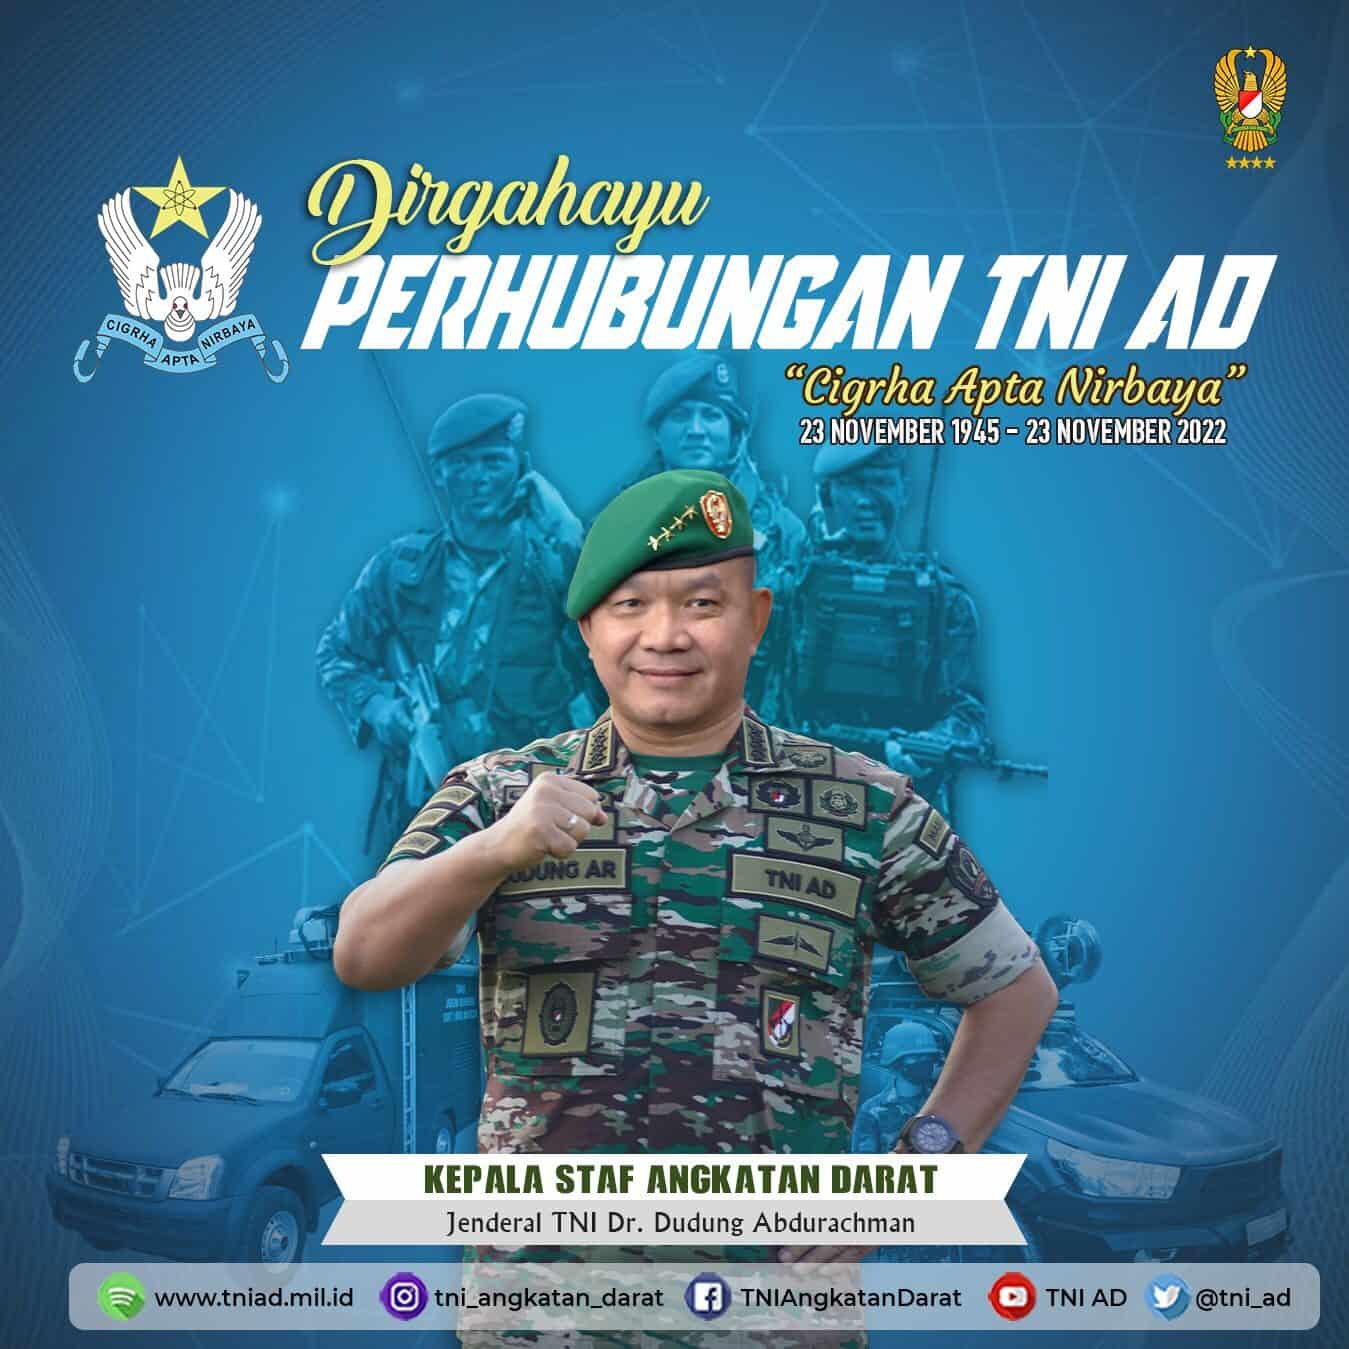 Dirgahayu Perhubungan TNI Angkatan Darat, 23 November 1945 – 23 November 2022 “Cighra Apta Nirbaya”